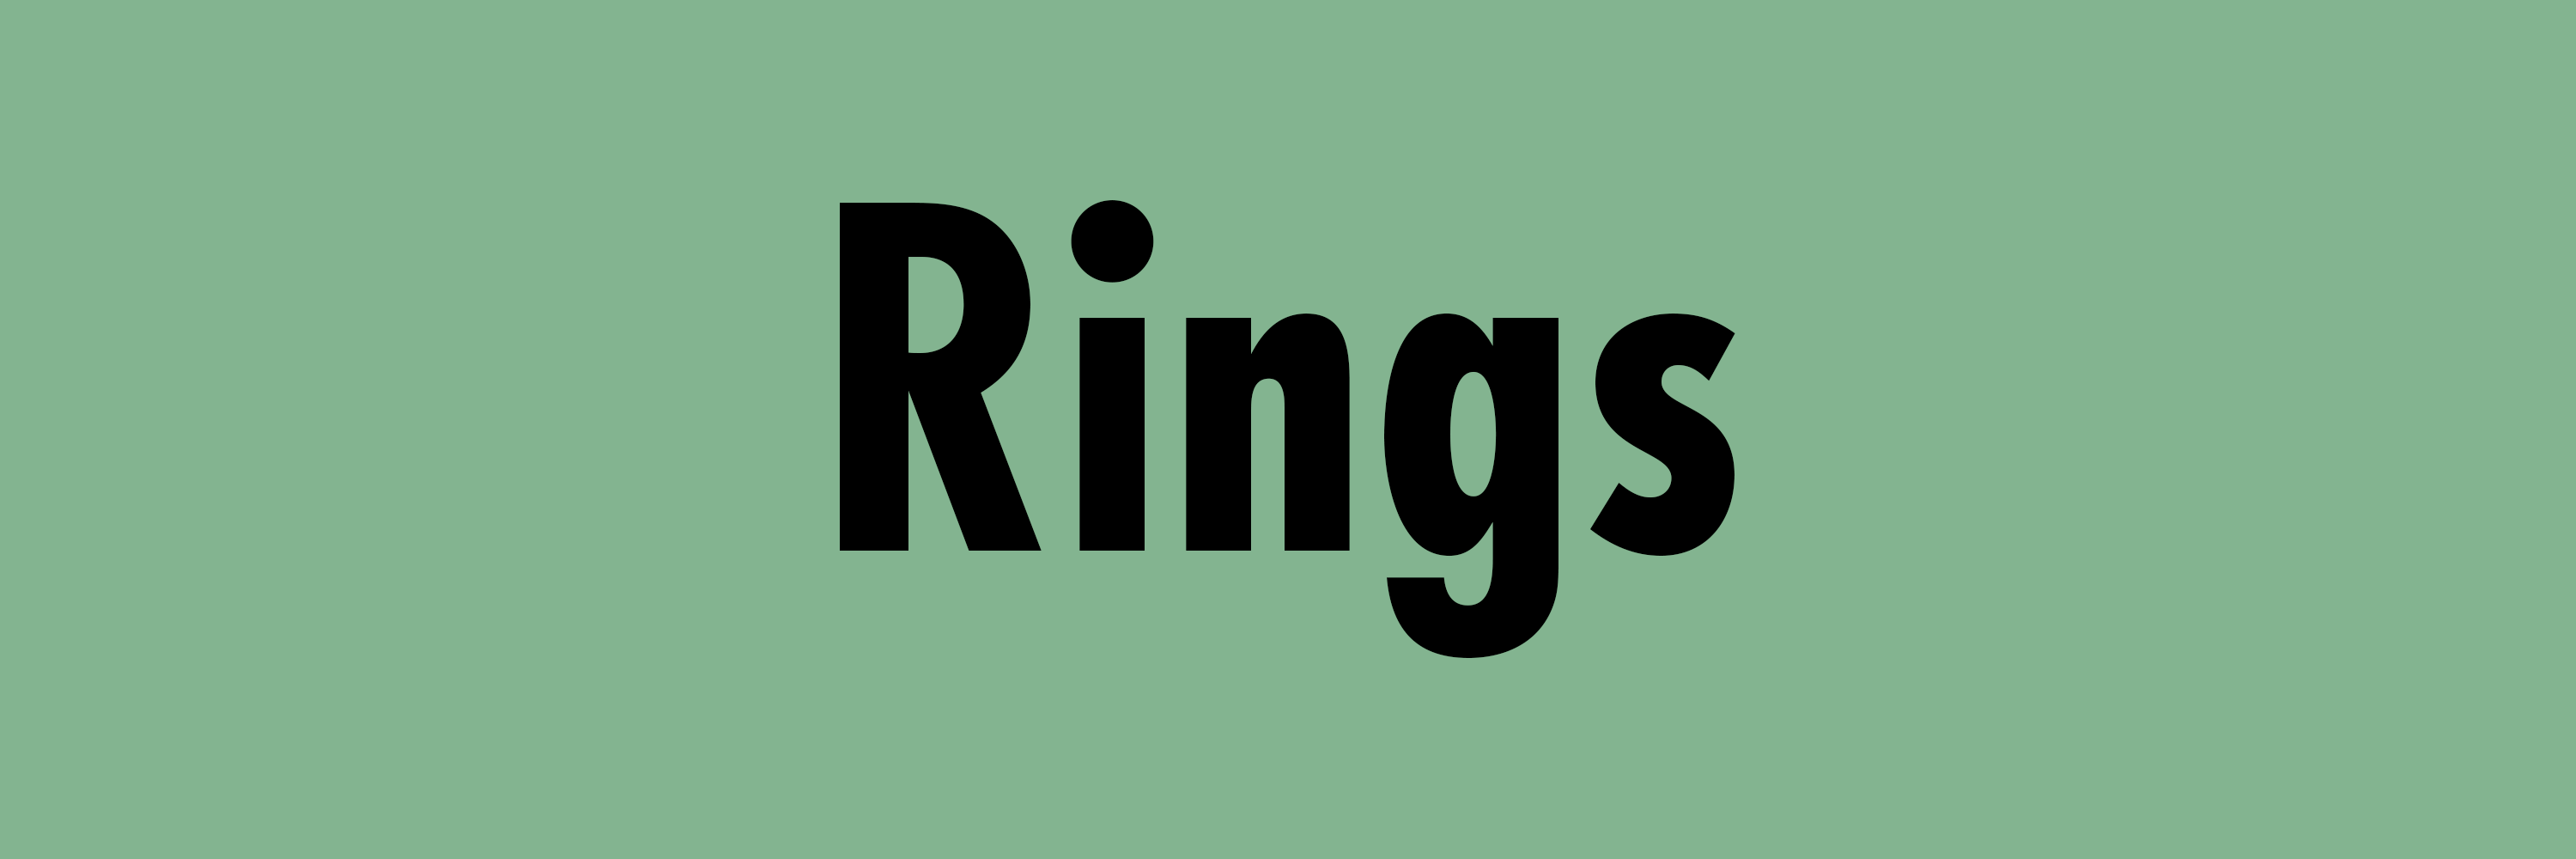 RINGS.png__PID:d7524205-85cc-4e11-a313-d5501c1fac92